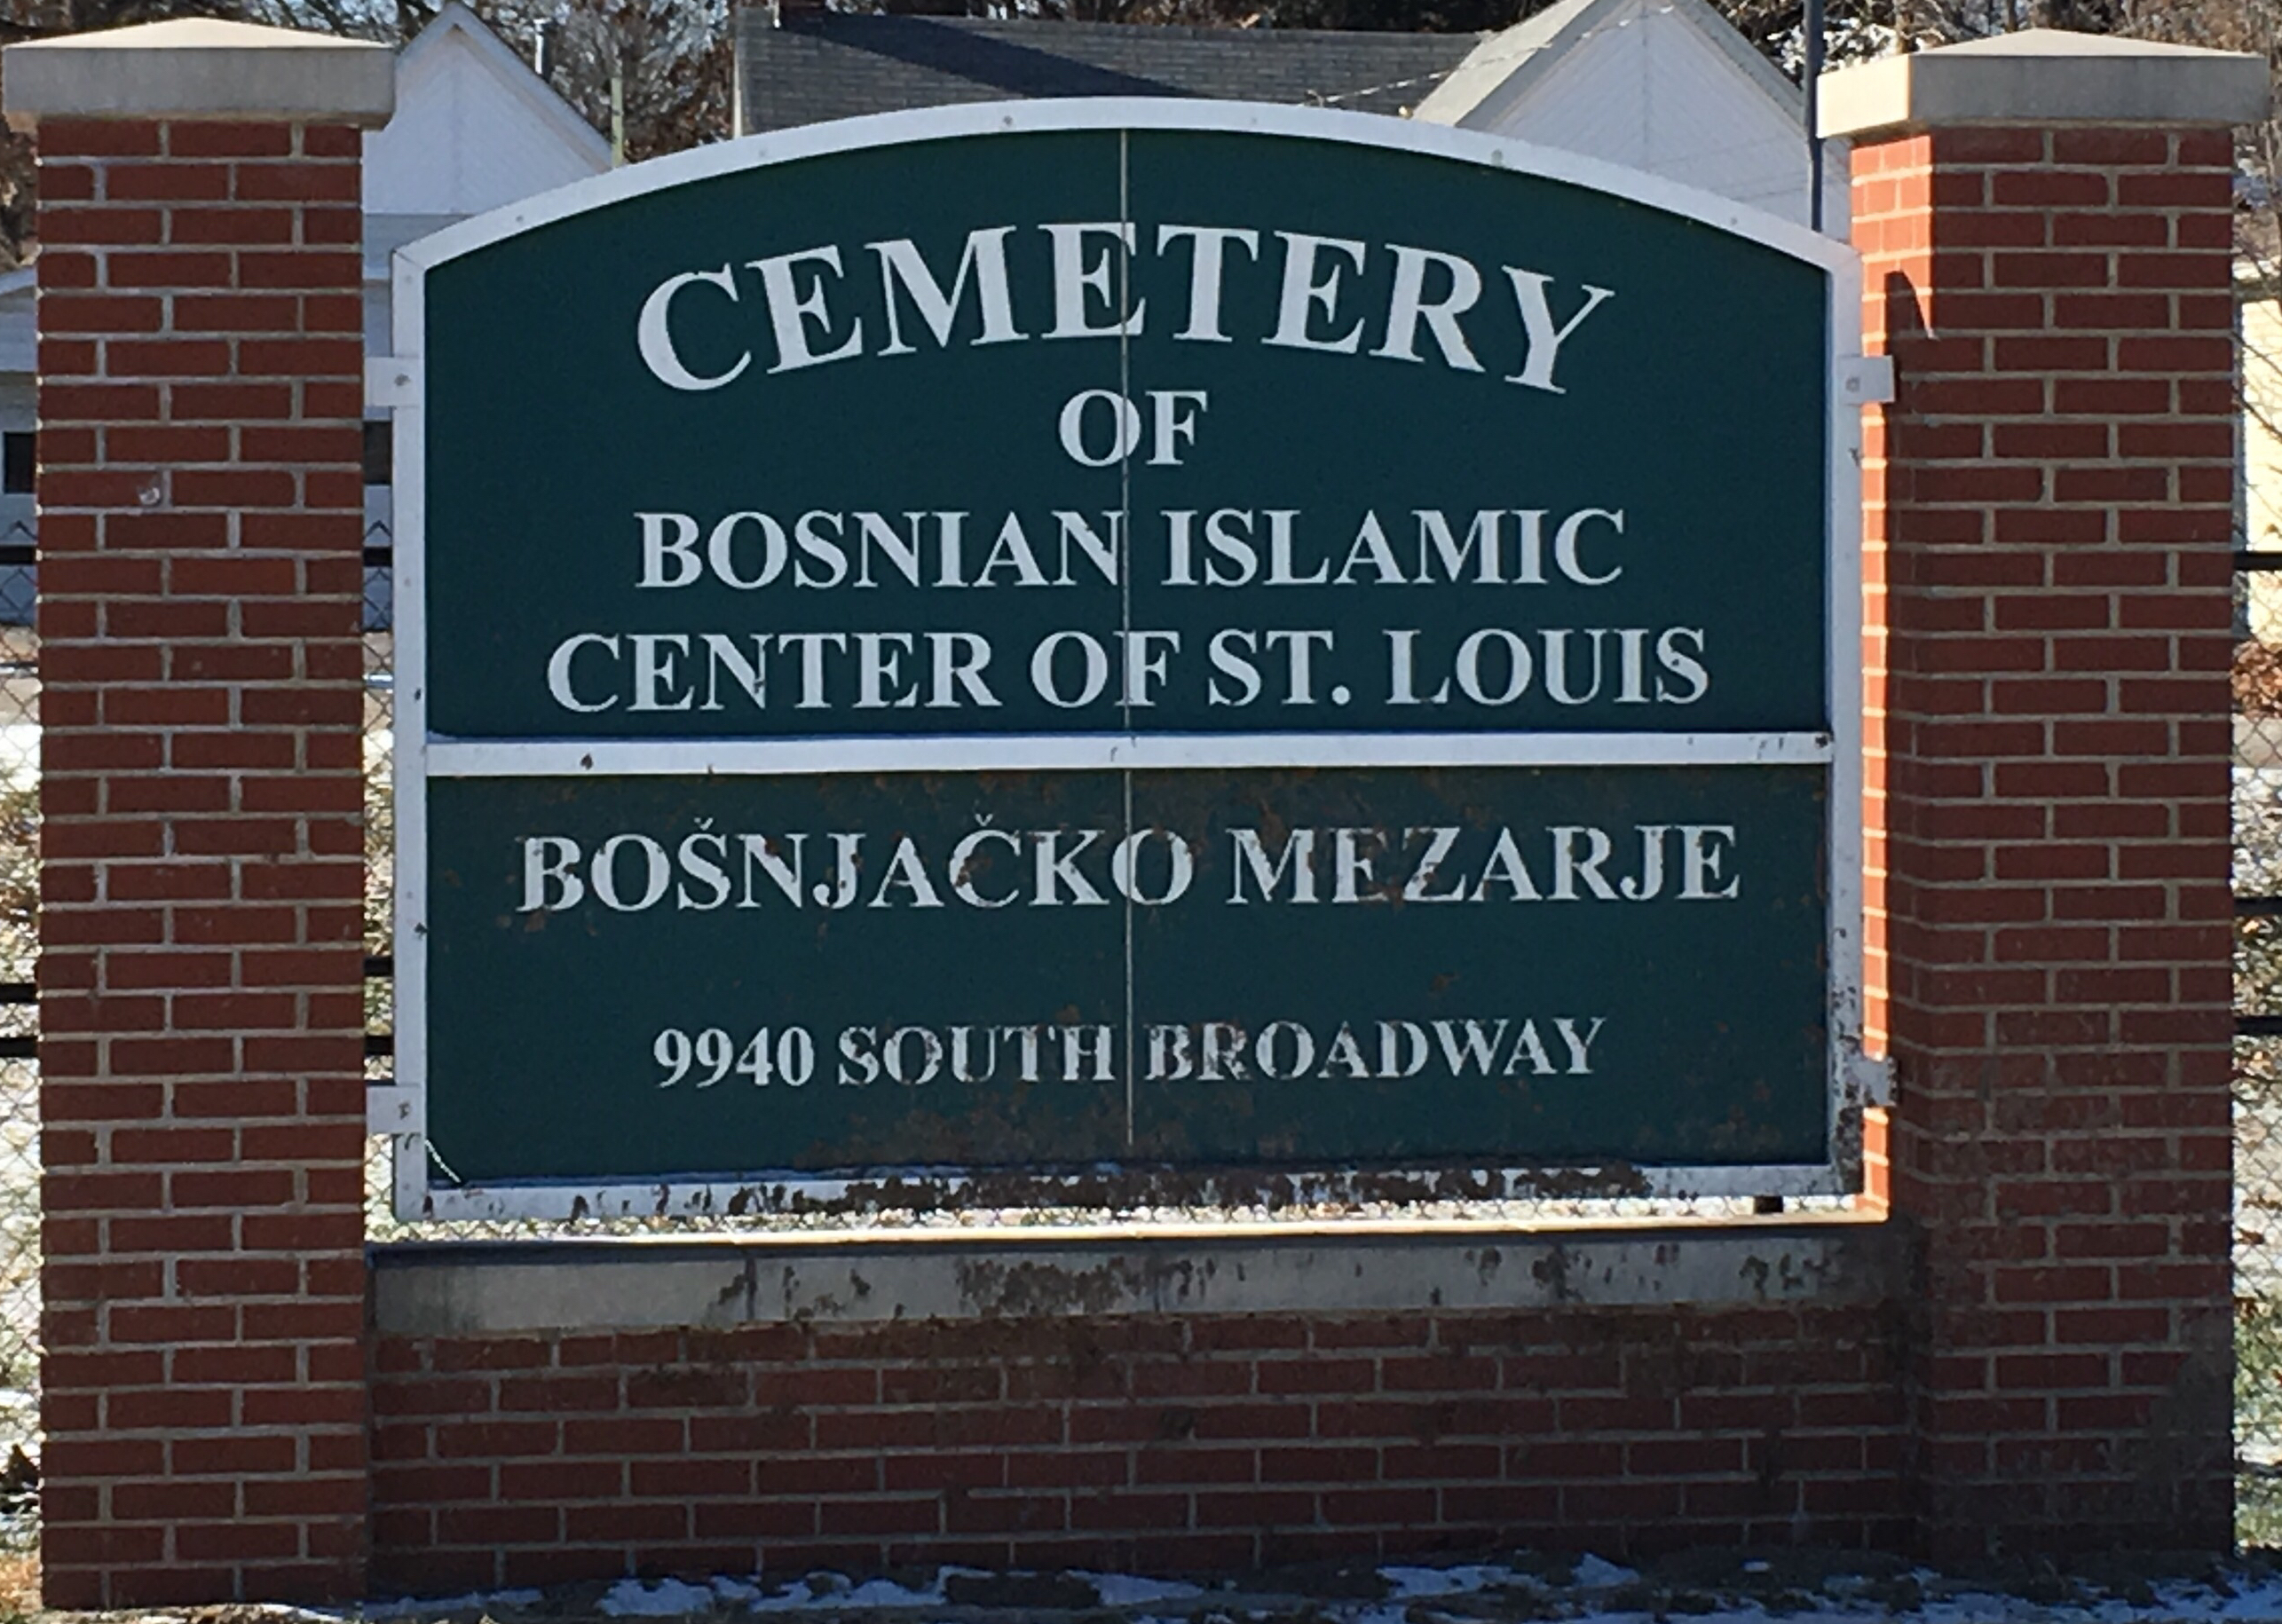 Cemetery of Bosnian Islamic Center of St. Louis